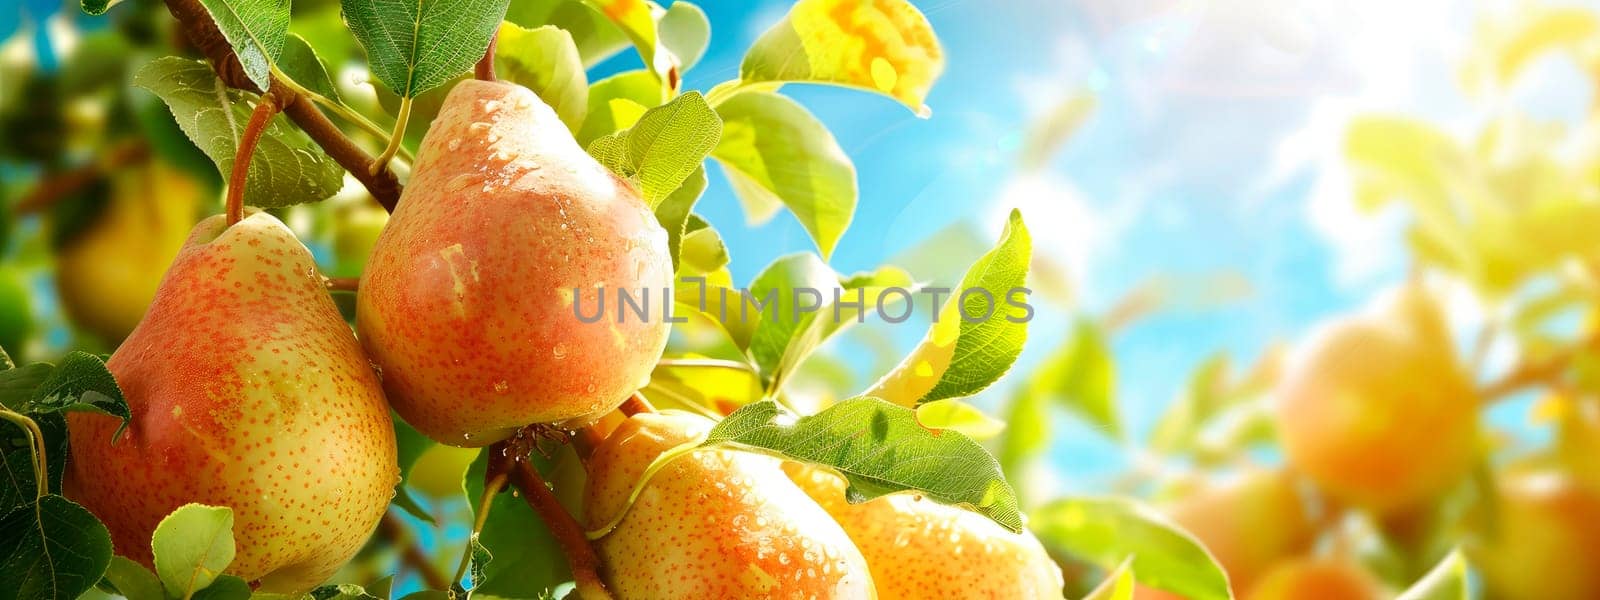 Pear harvest in the garden. selective focus. by yanadjana